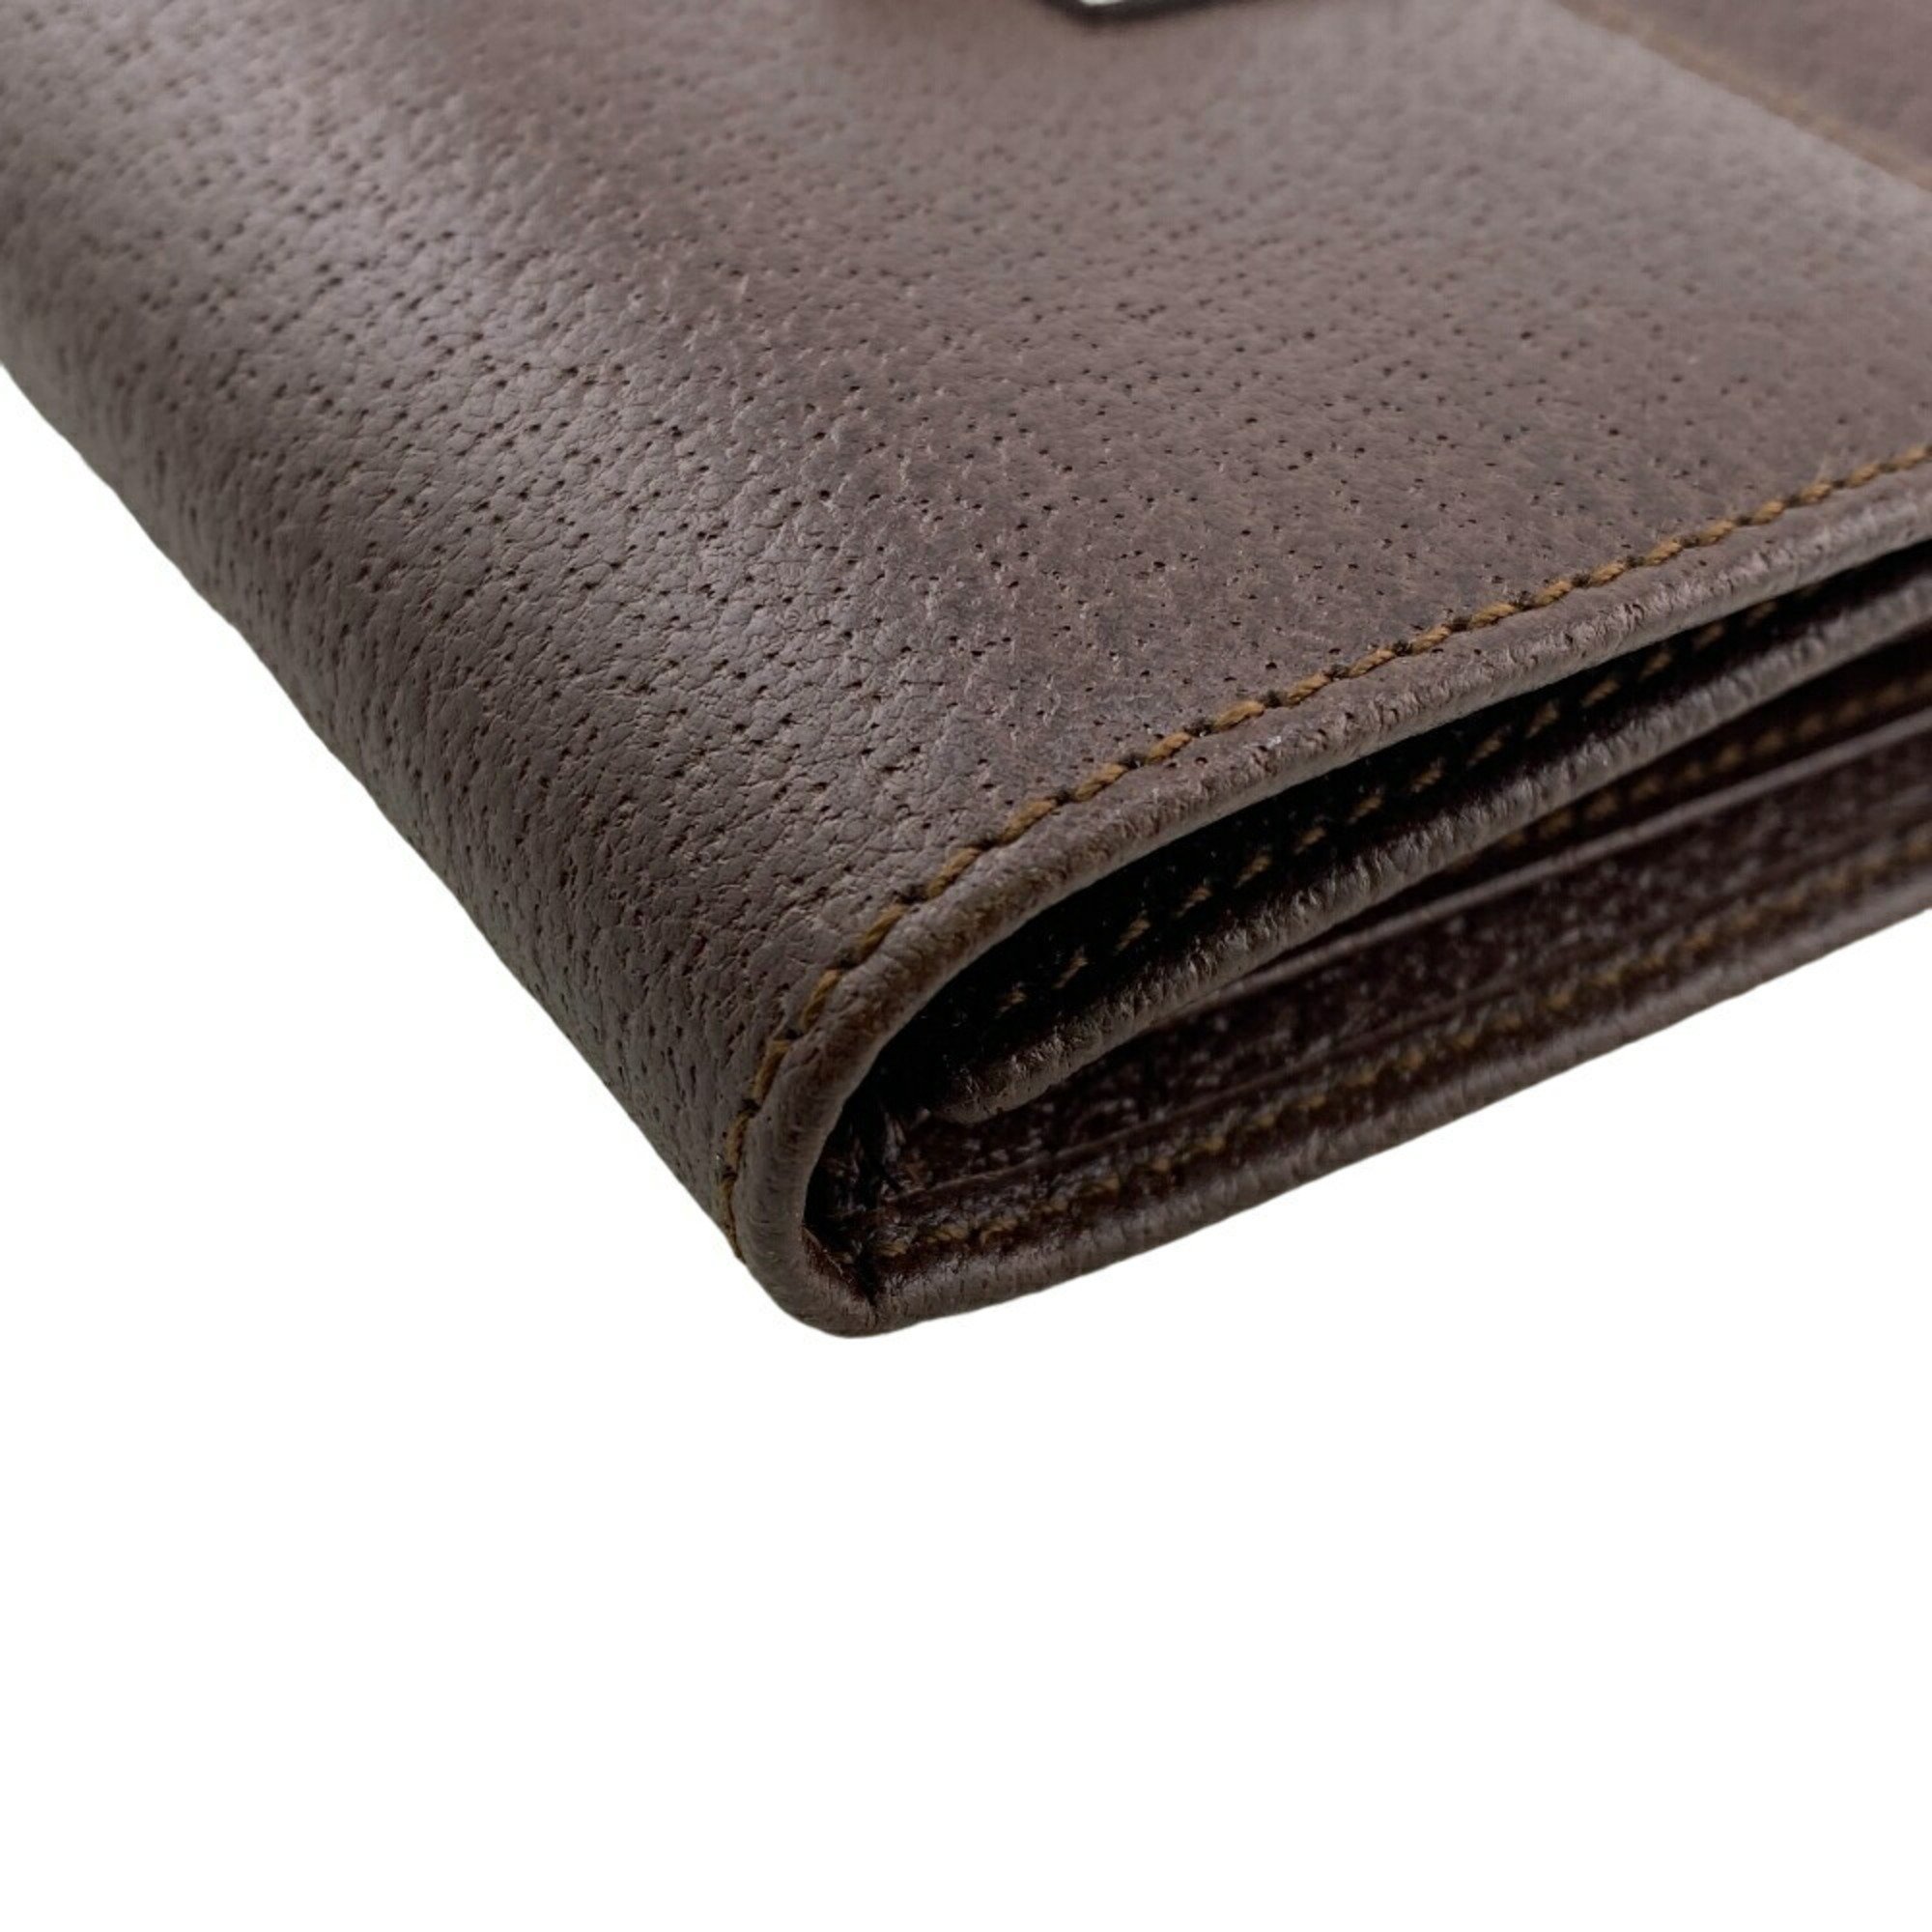 GUCCI Gucci Tri-fold Wallet Brown Unisex Z0006958